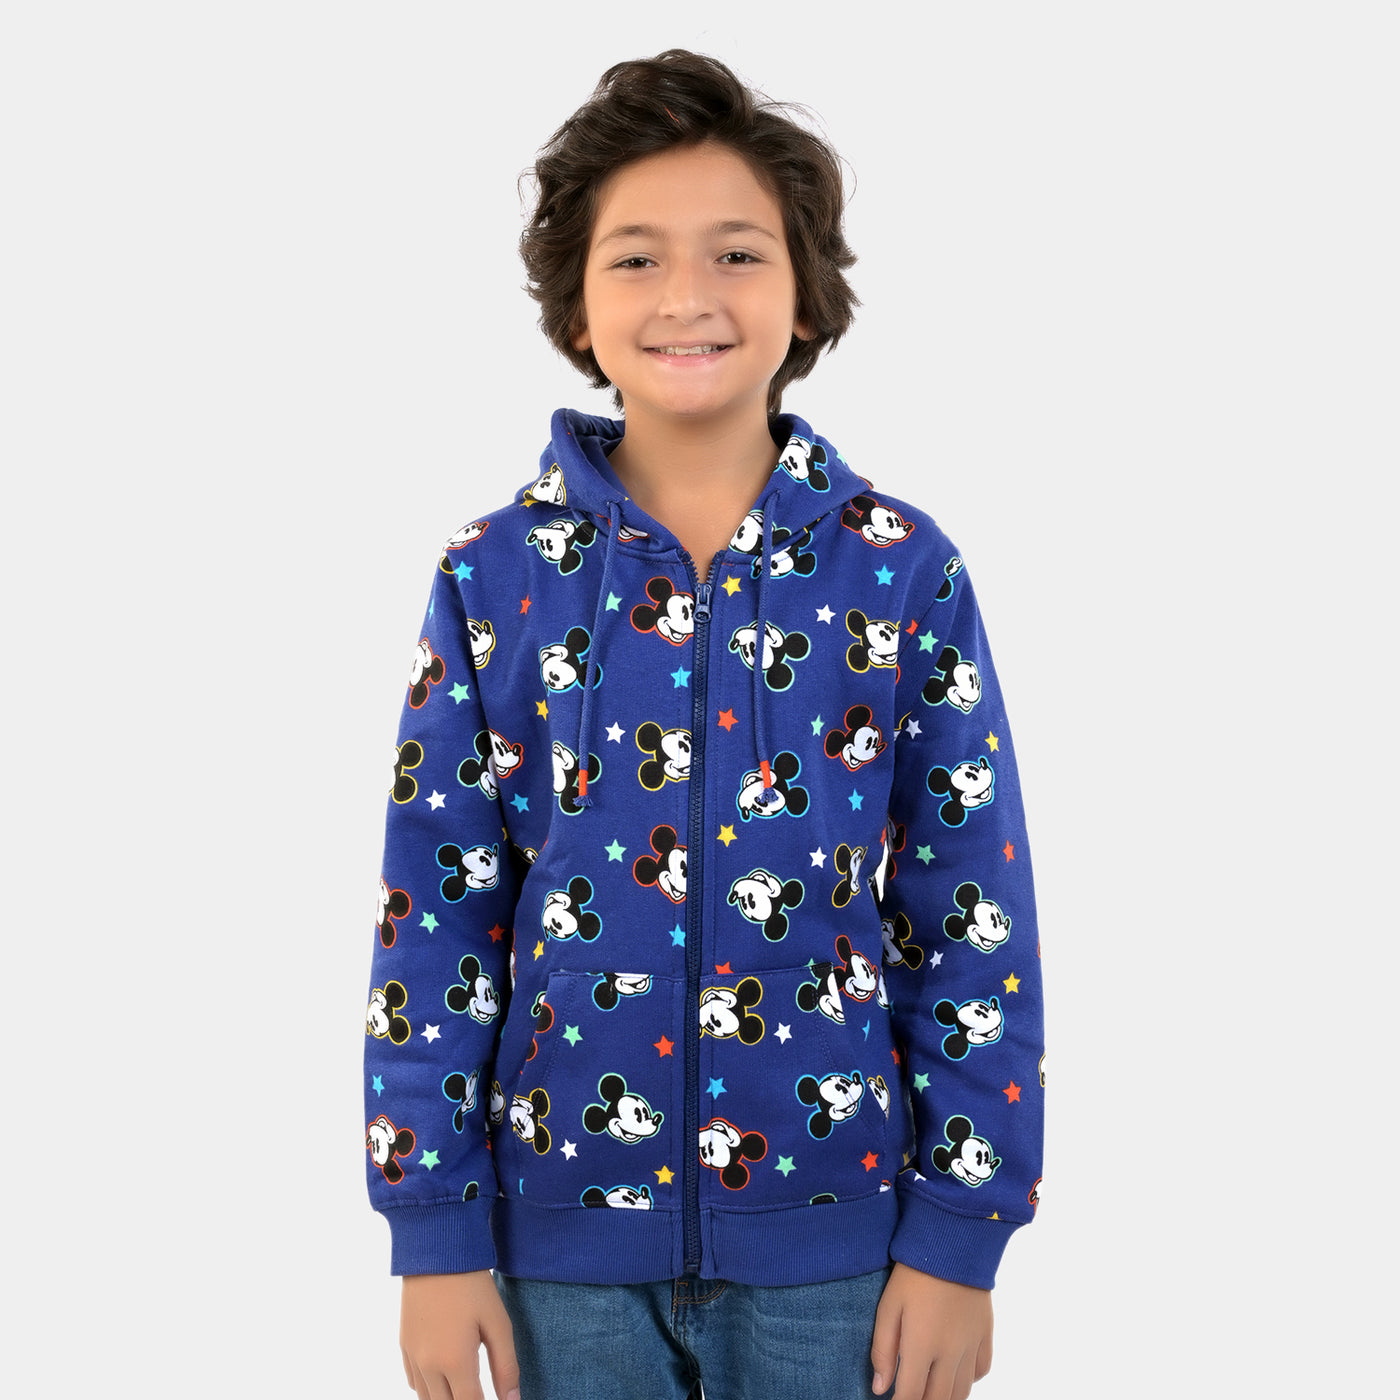 Boys Fleece Knitted Jacket Printed-Navy Blue